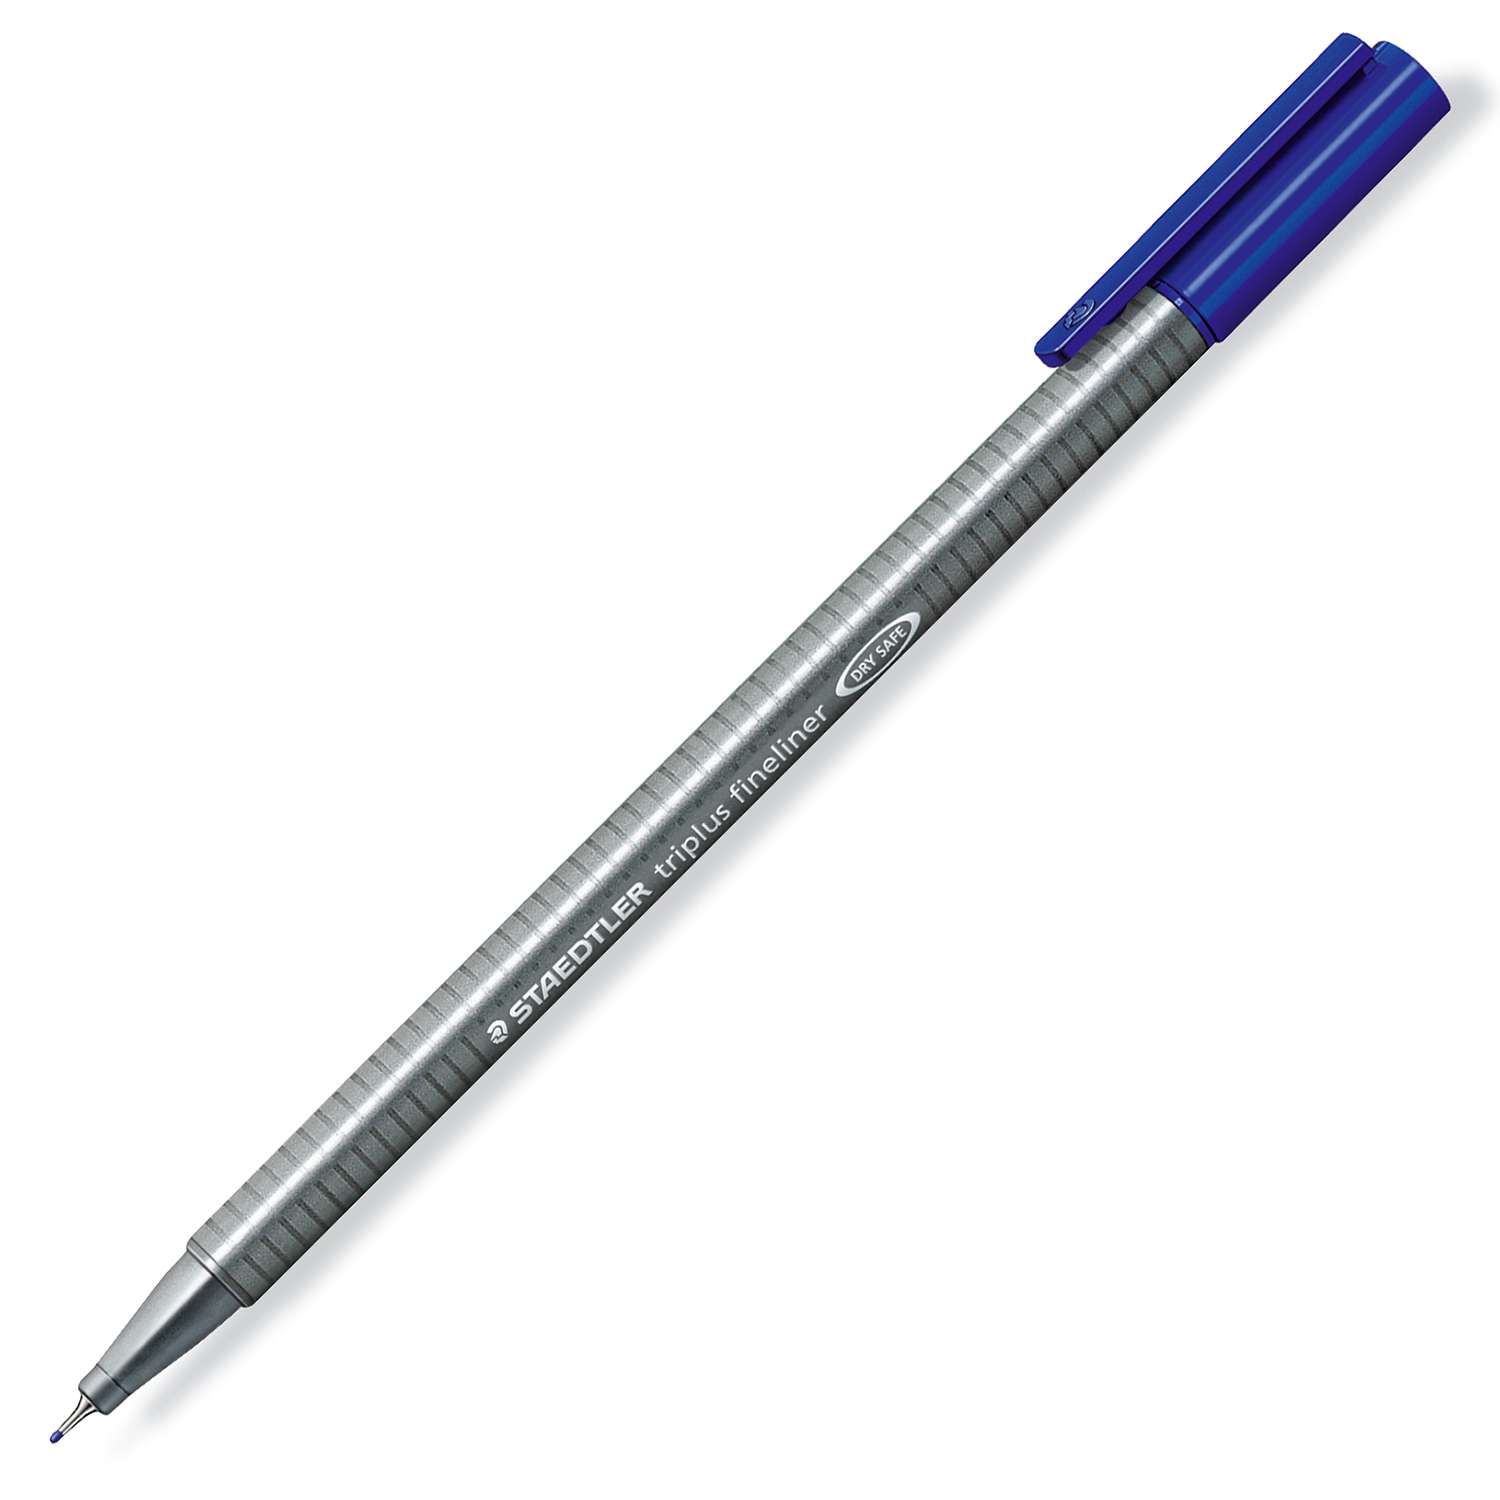 Ручка капиллярная Staedtler Triplus трехгранная Синяя - фото 1